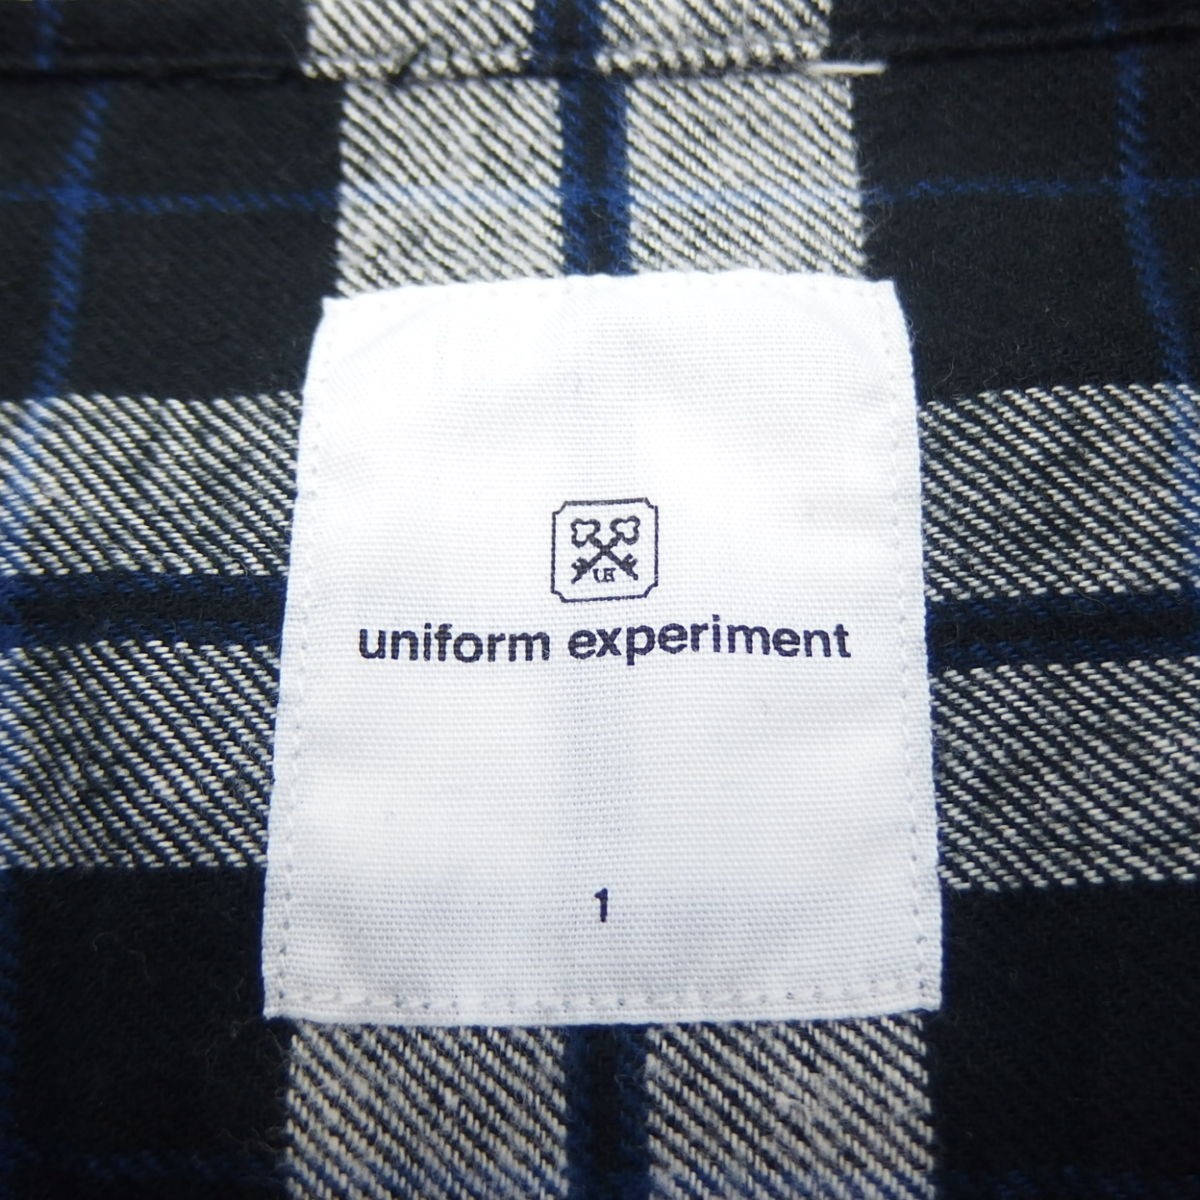 18AW 18FW uniform experiment UNIFORM EMBROIDERY REGULAR COLLAR FLANNEL CHECK SHIRT 長袖 ロゴ 刺繍 チェック ネルシャツ BLACK 1_画像6